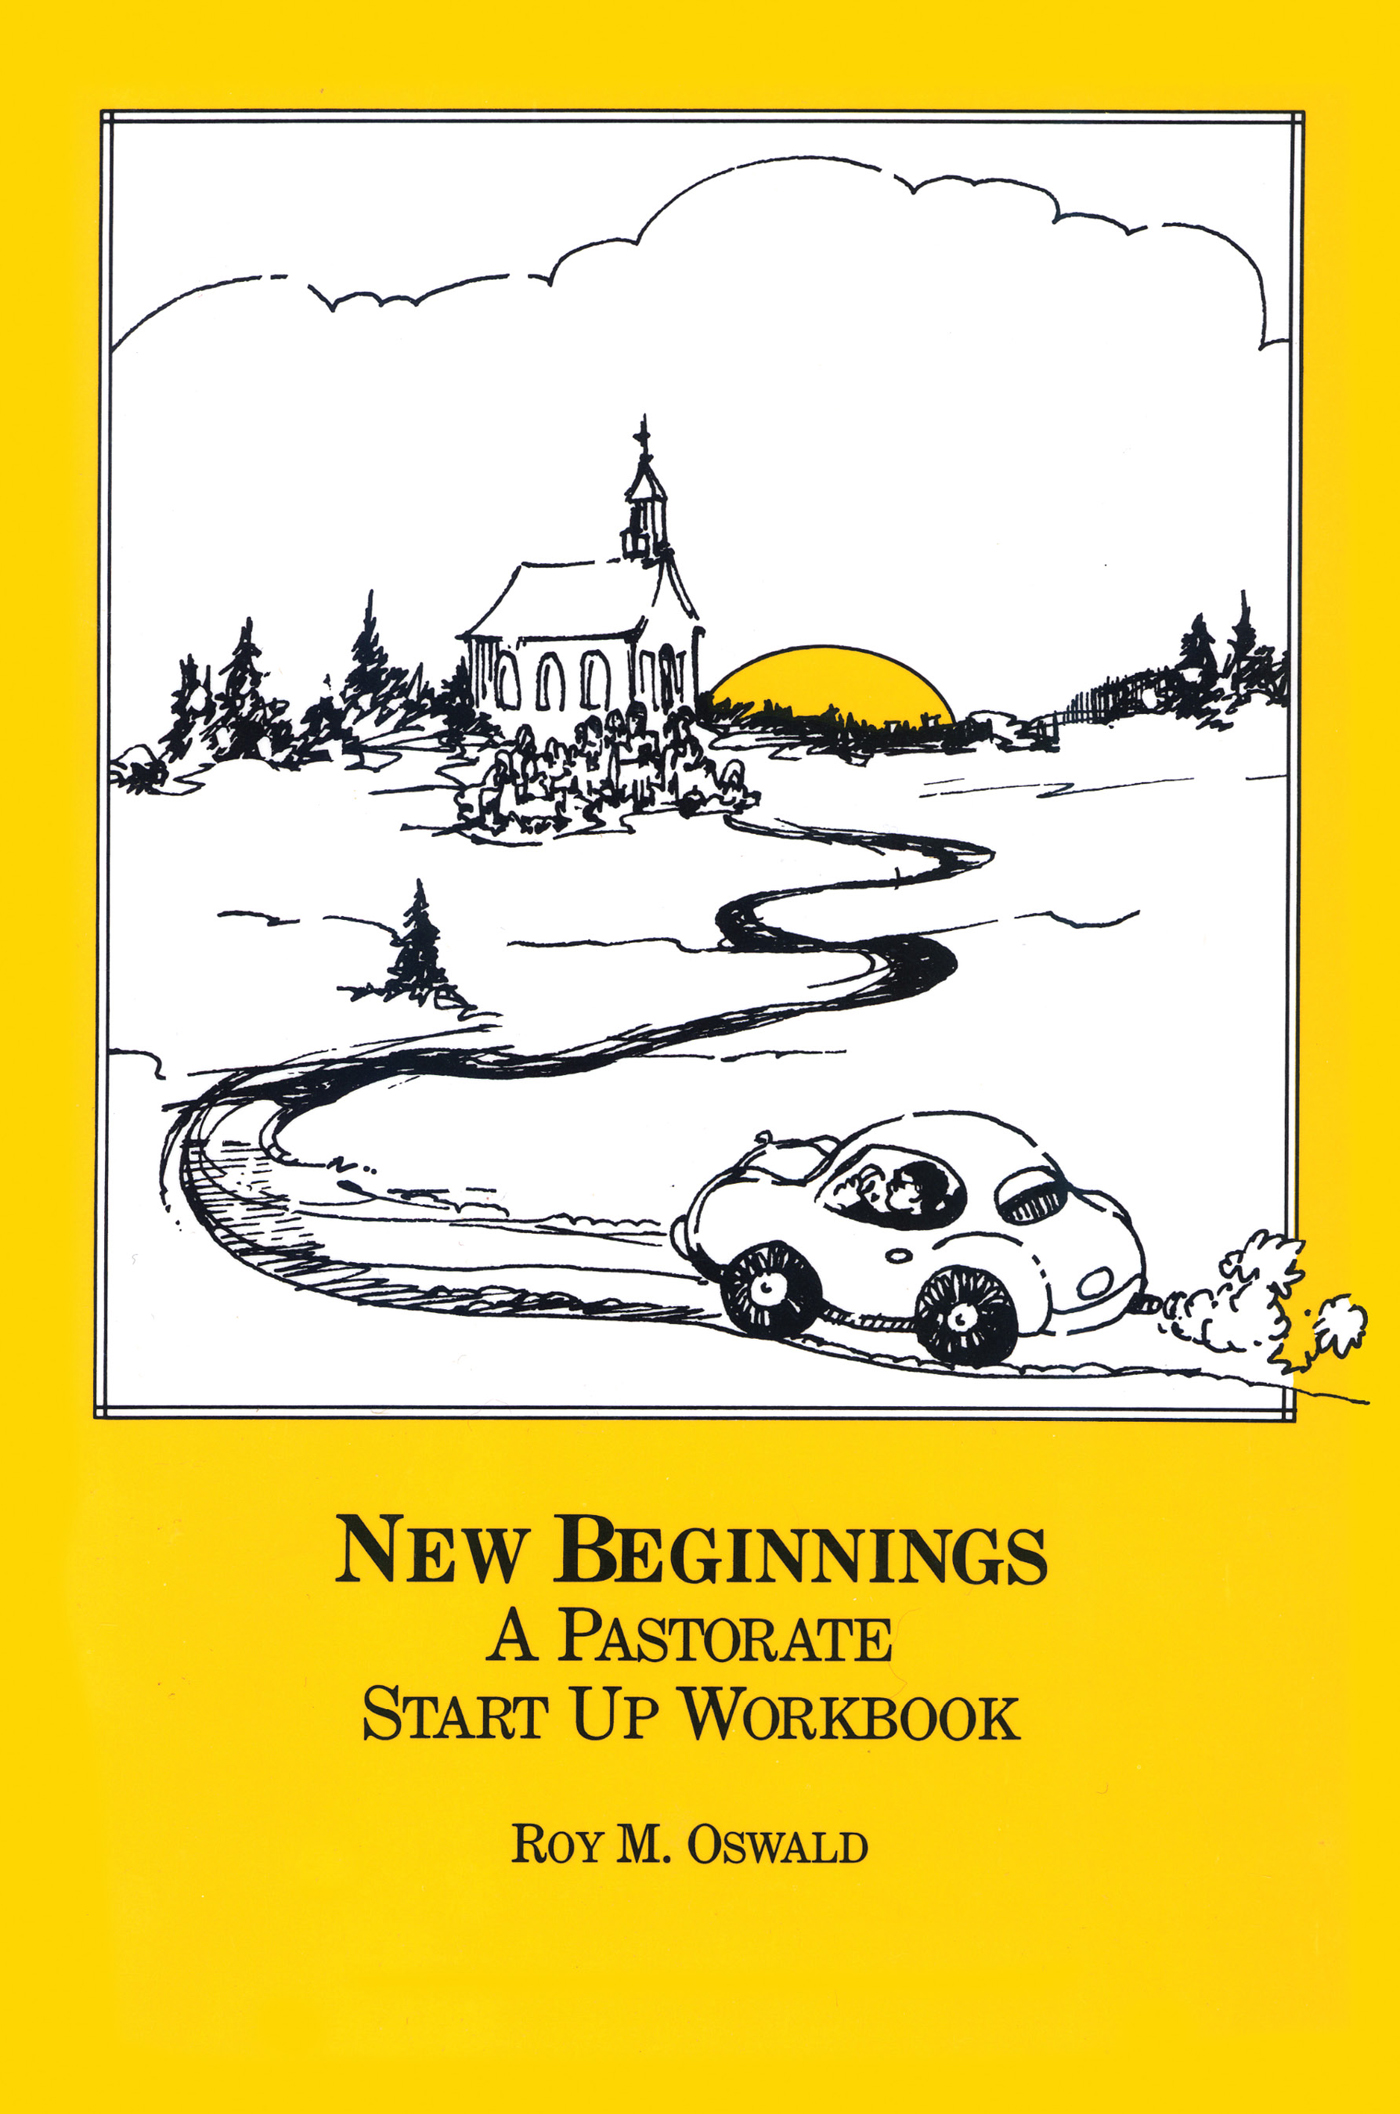 New Beginnings: A Pastorate Start Up Workbook